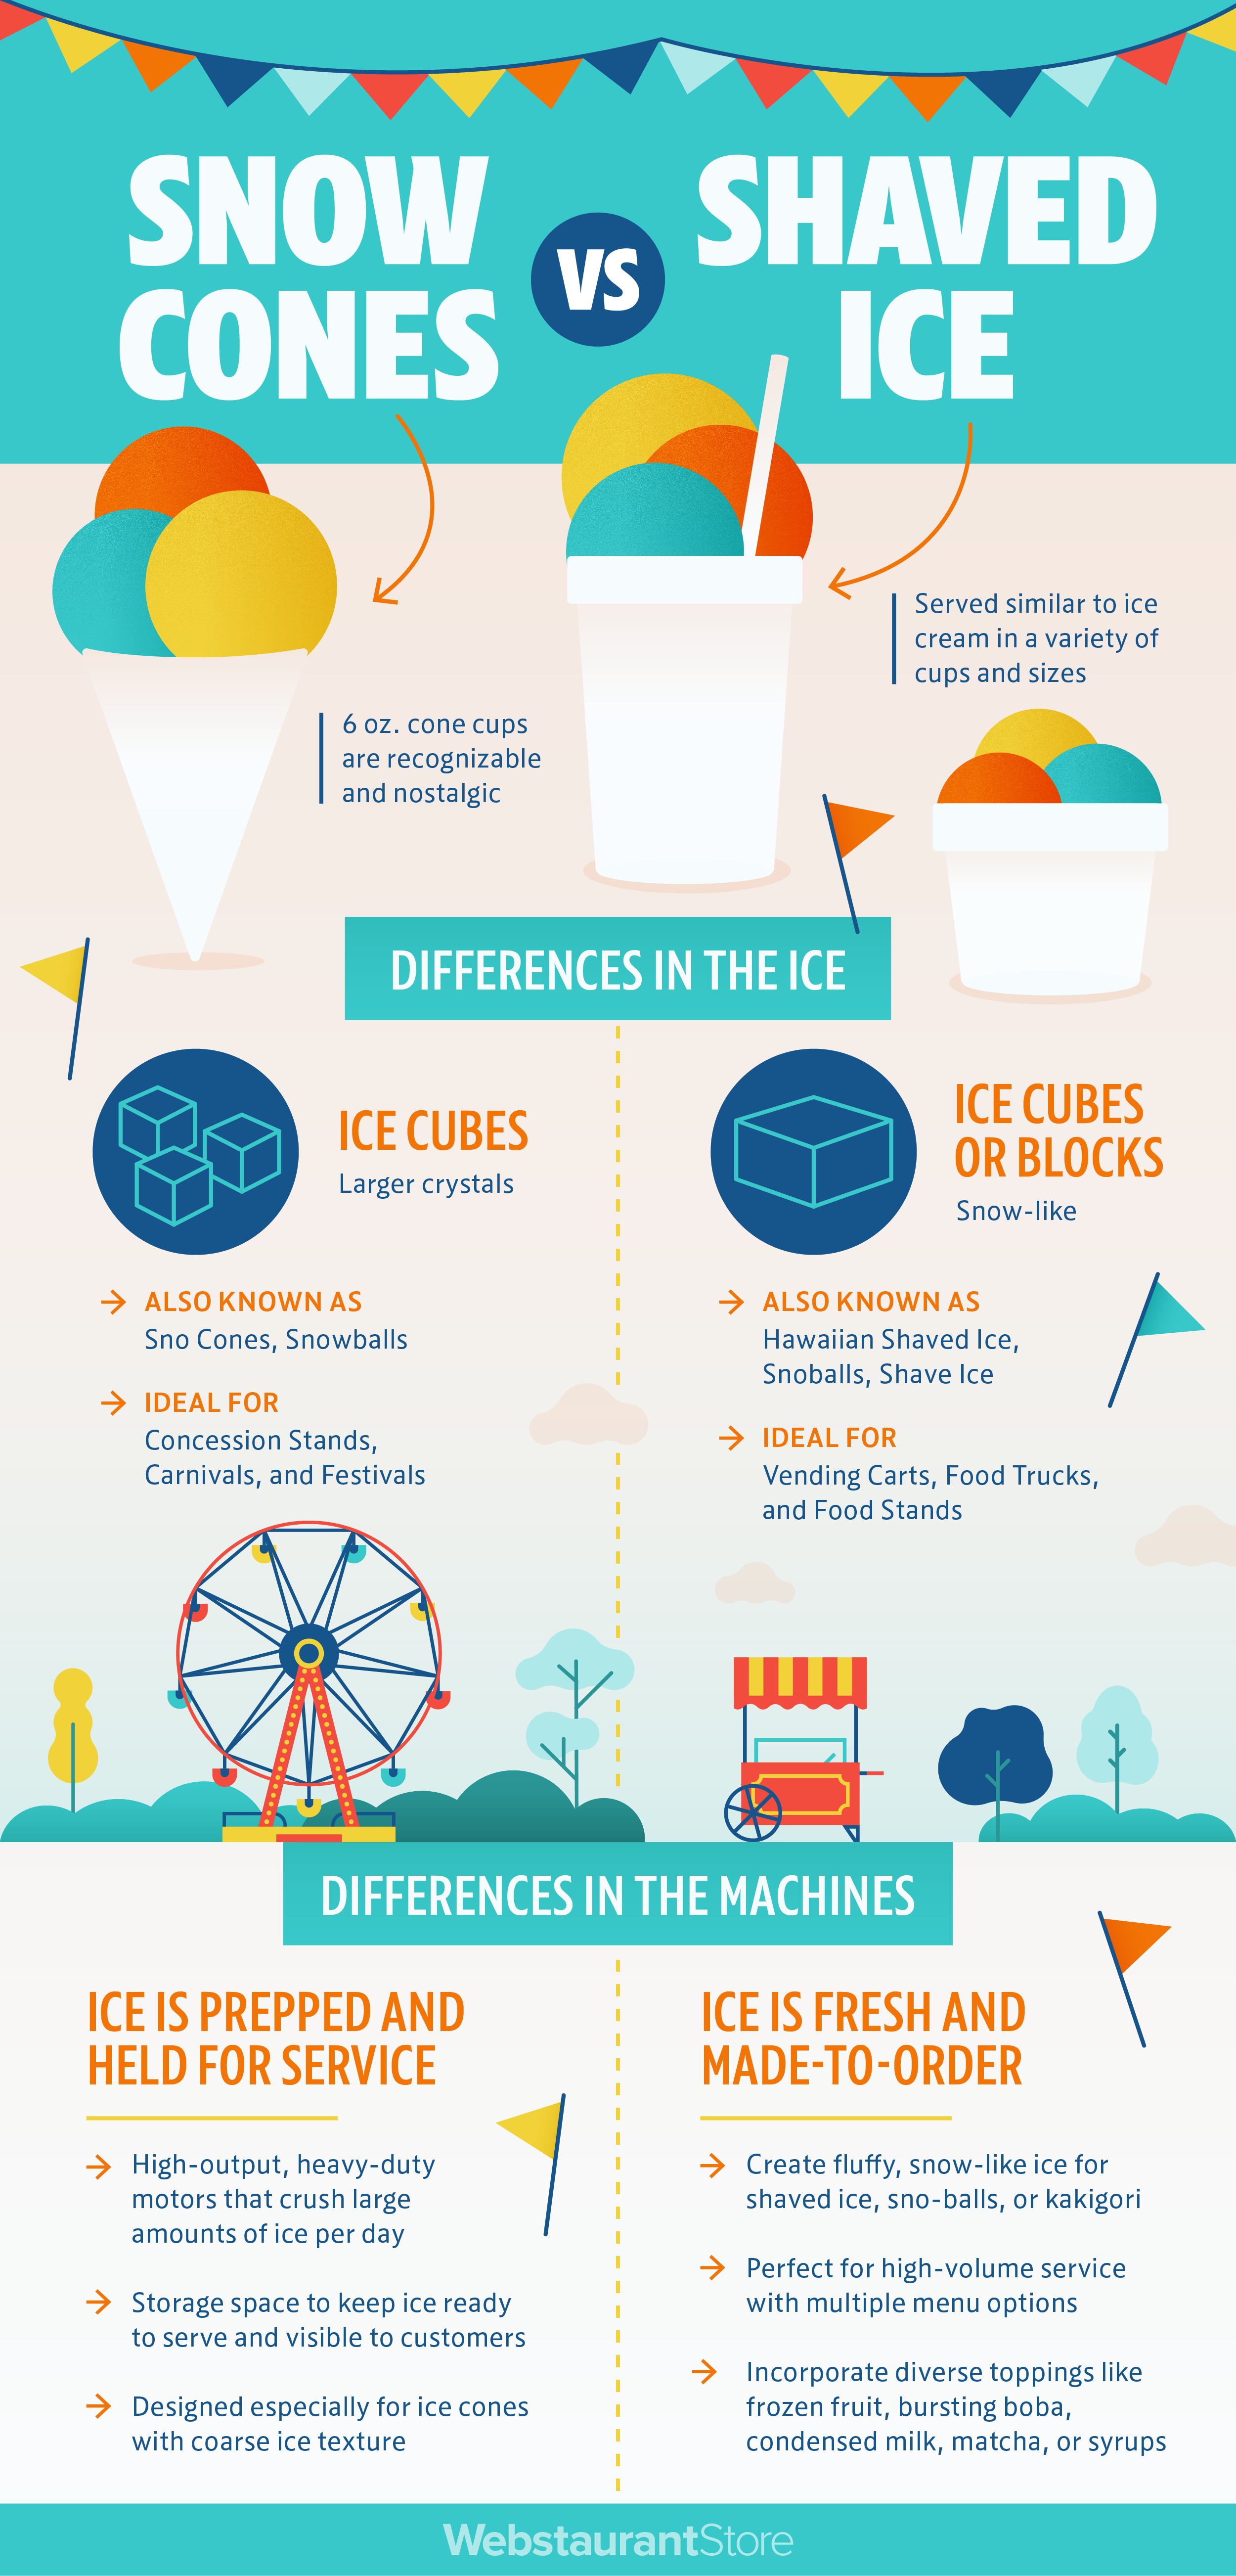 Snow Cones vs. Shaved Ice